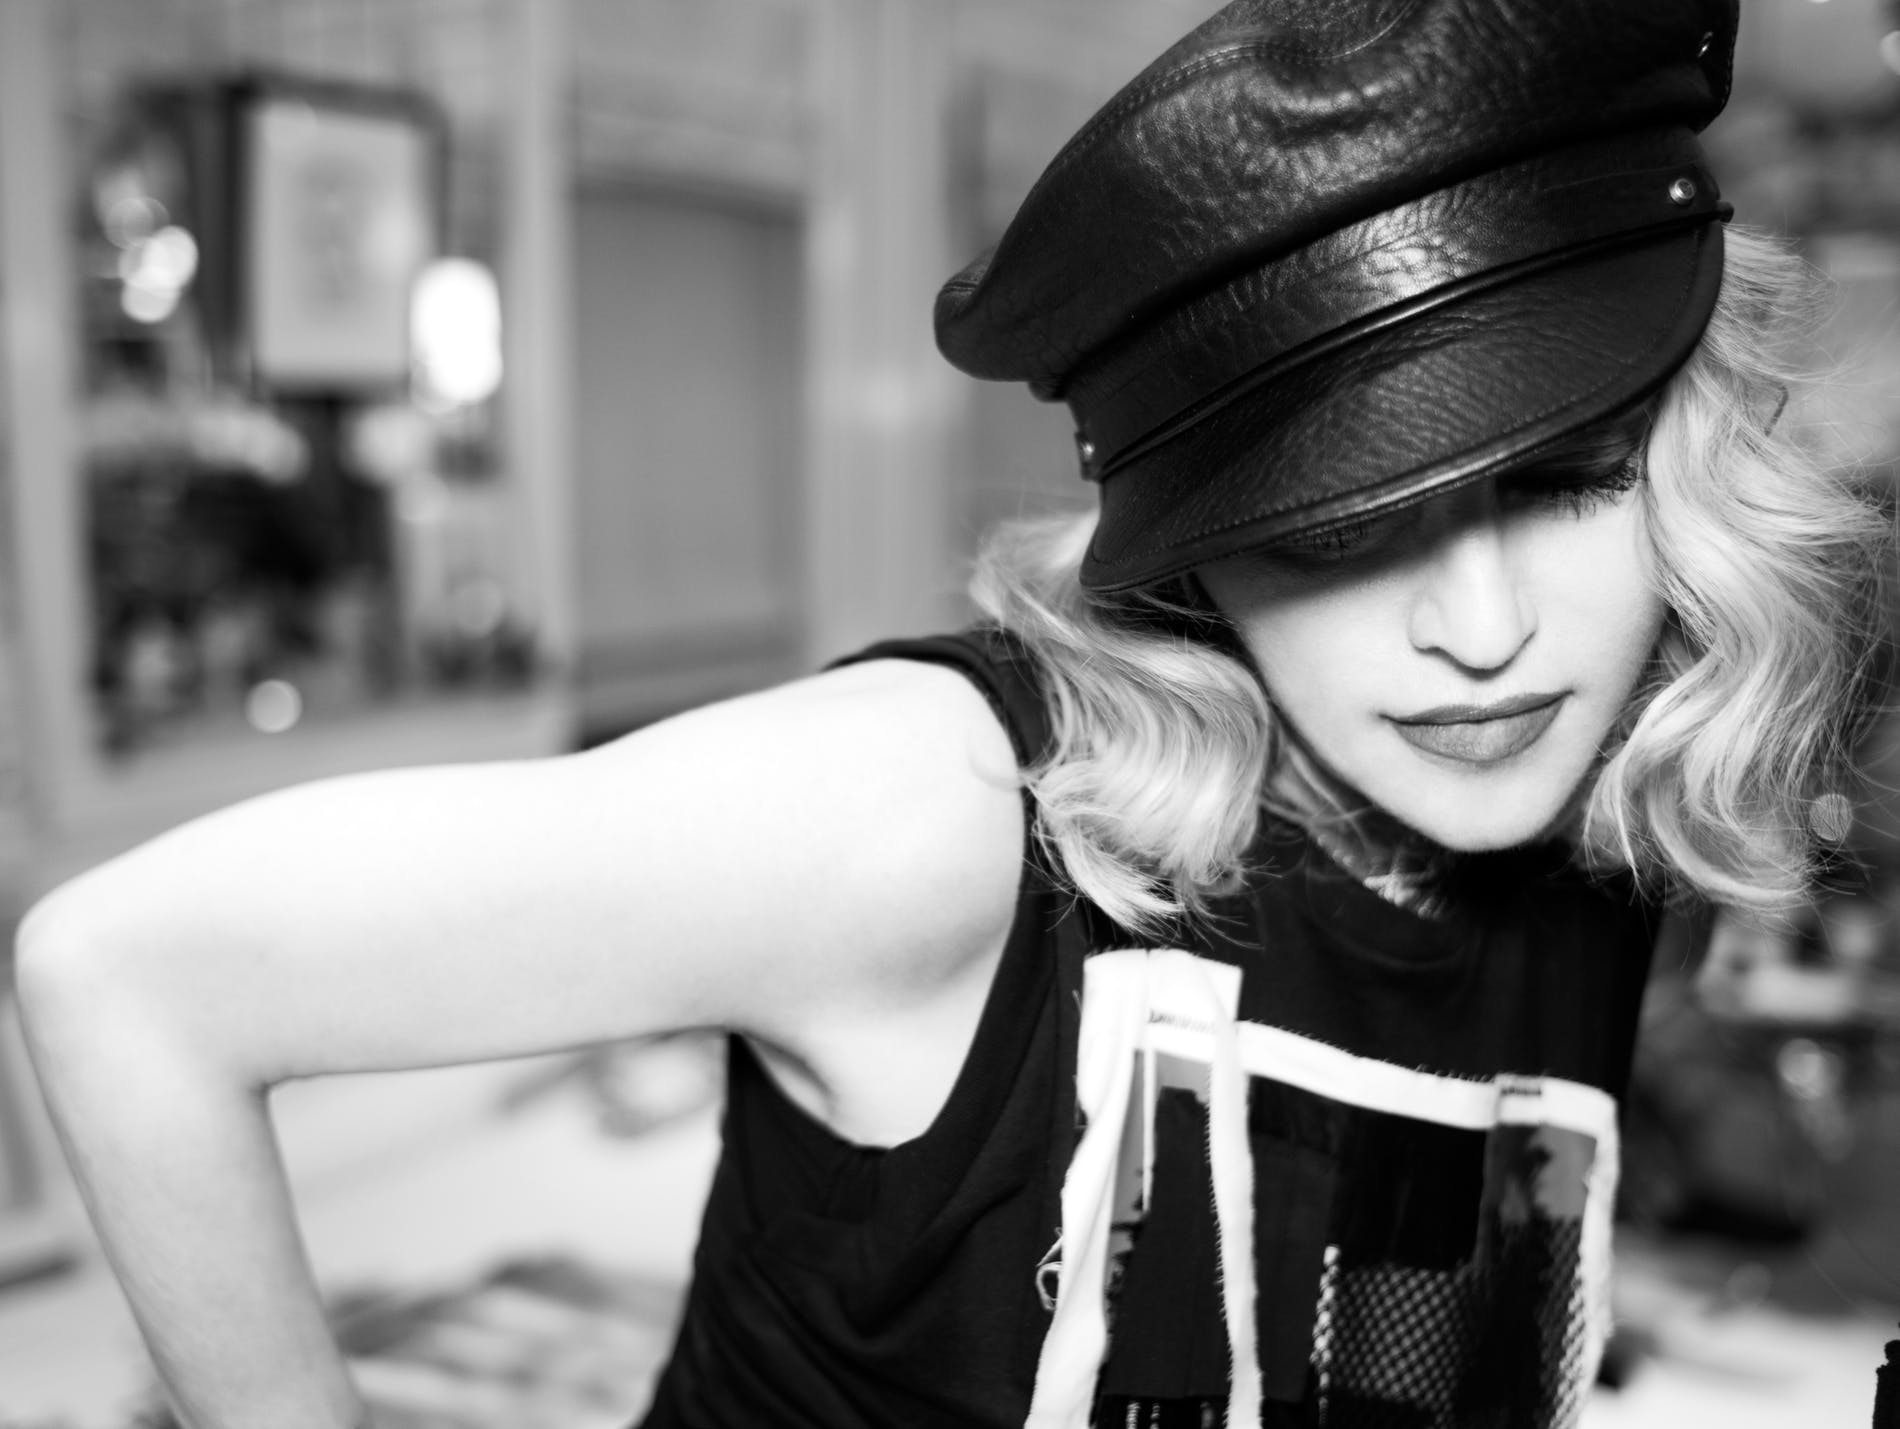 Madonna for L'Officiel Italia Magazine. Photo by Ricrado Gomes